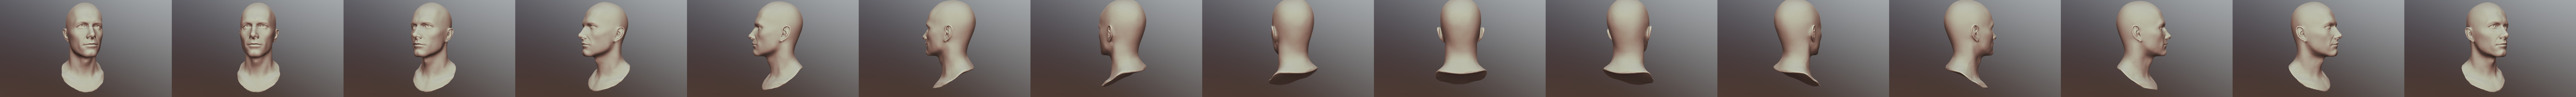 STL file 13 Male Head Sculpt 01 3D model Low-poly 3D model